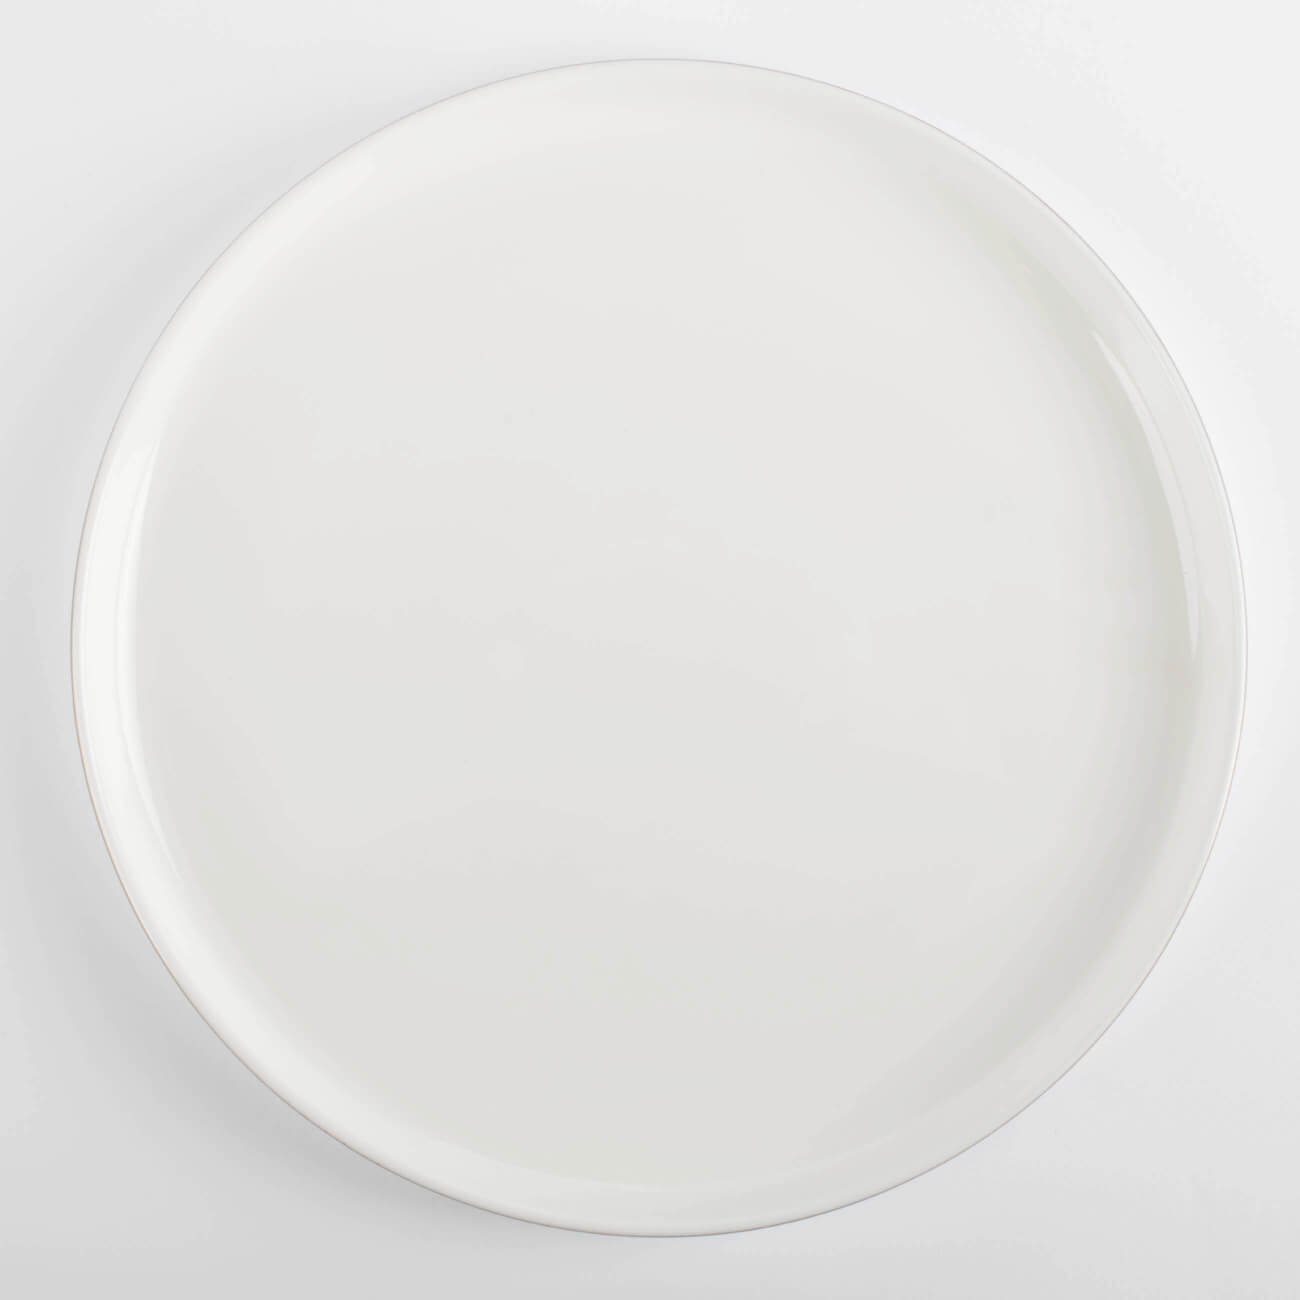 тарелка обеденная wedgwood wgw 40003895 гибискус 27 см Тарелка обеденная, 26 см, фарфор F, белая, Ideal gold